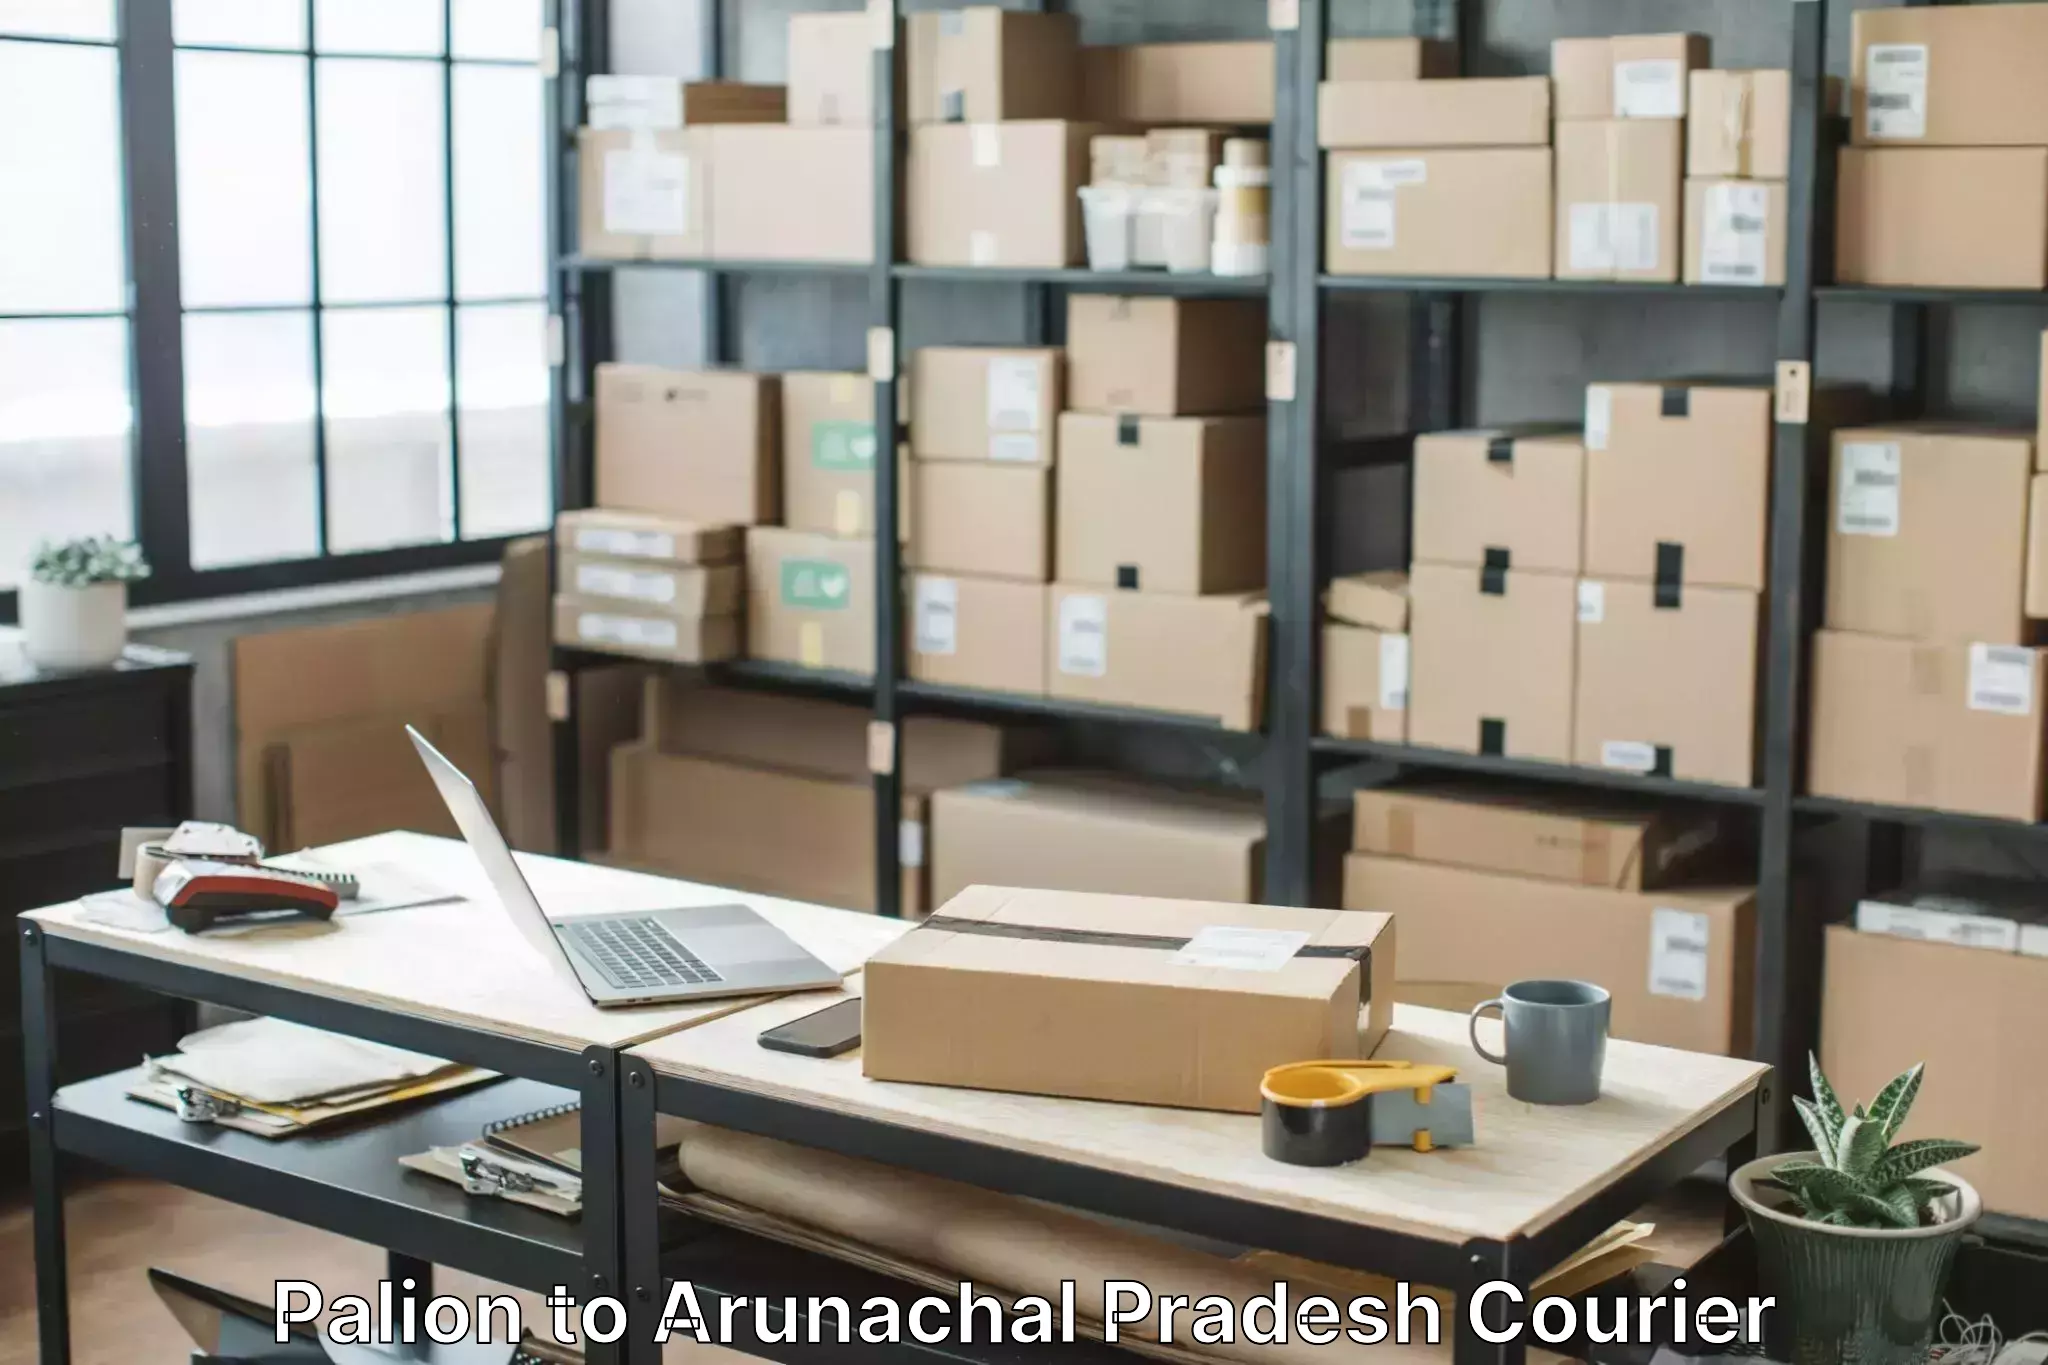 Moving and packing experts Palion to Arunachal Pradesh